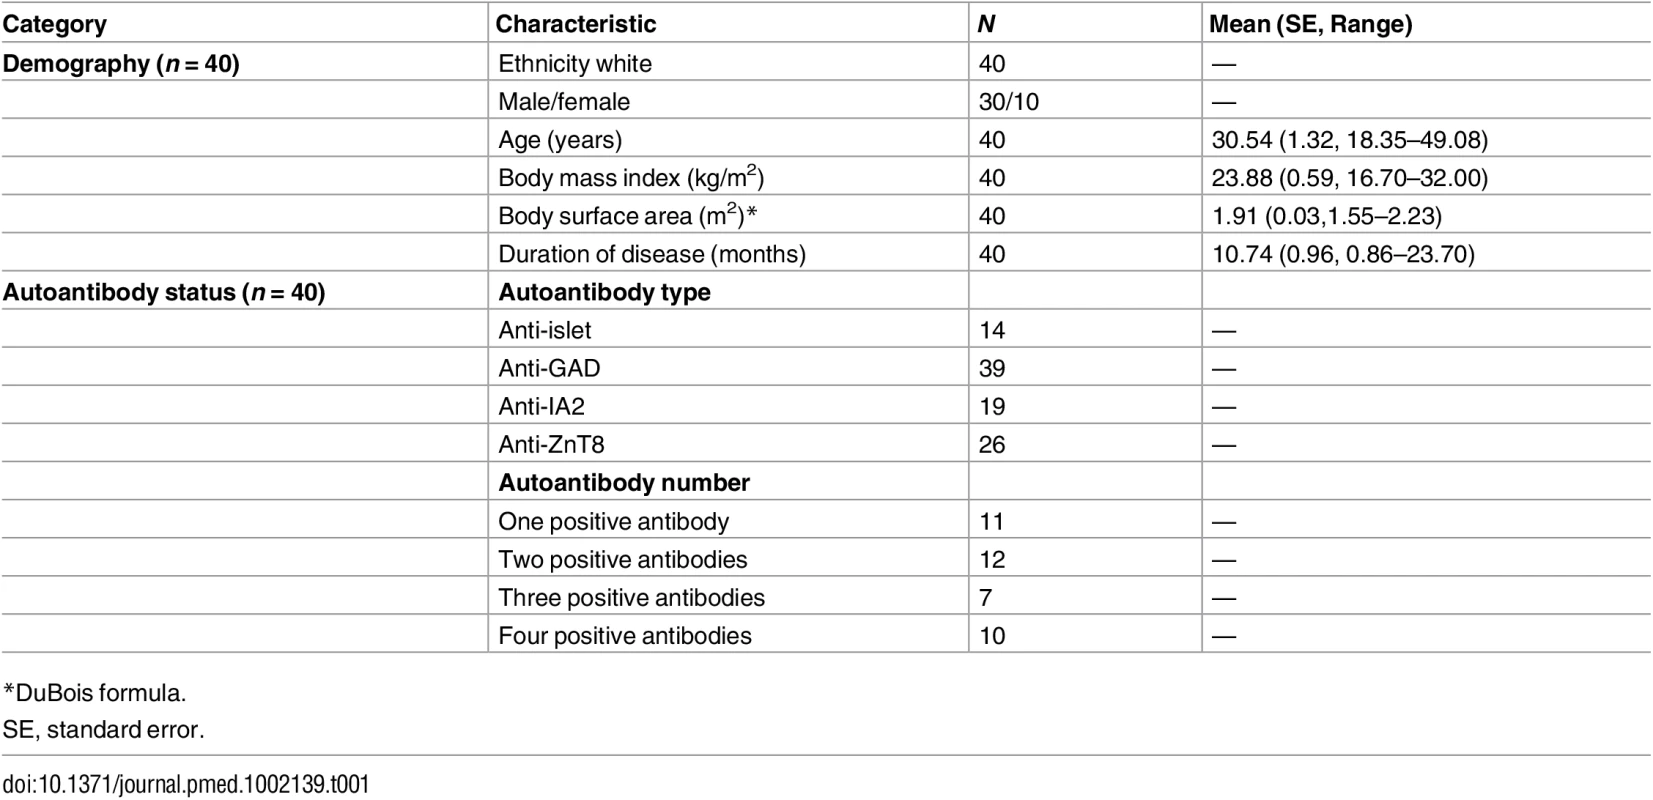 Participant characteristics and autoantibody status.